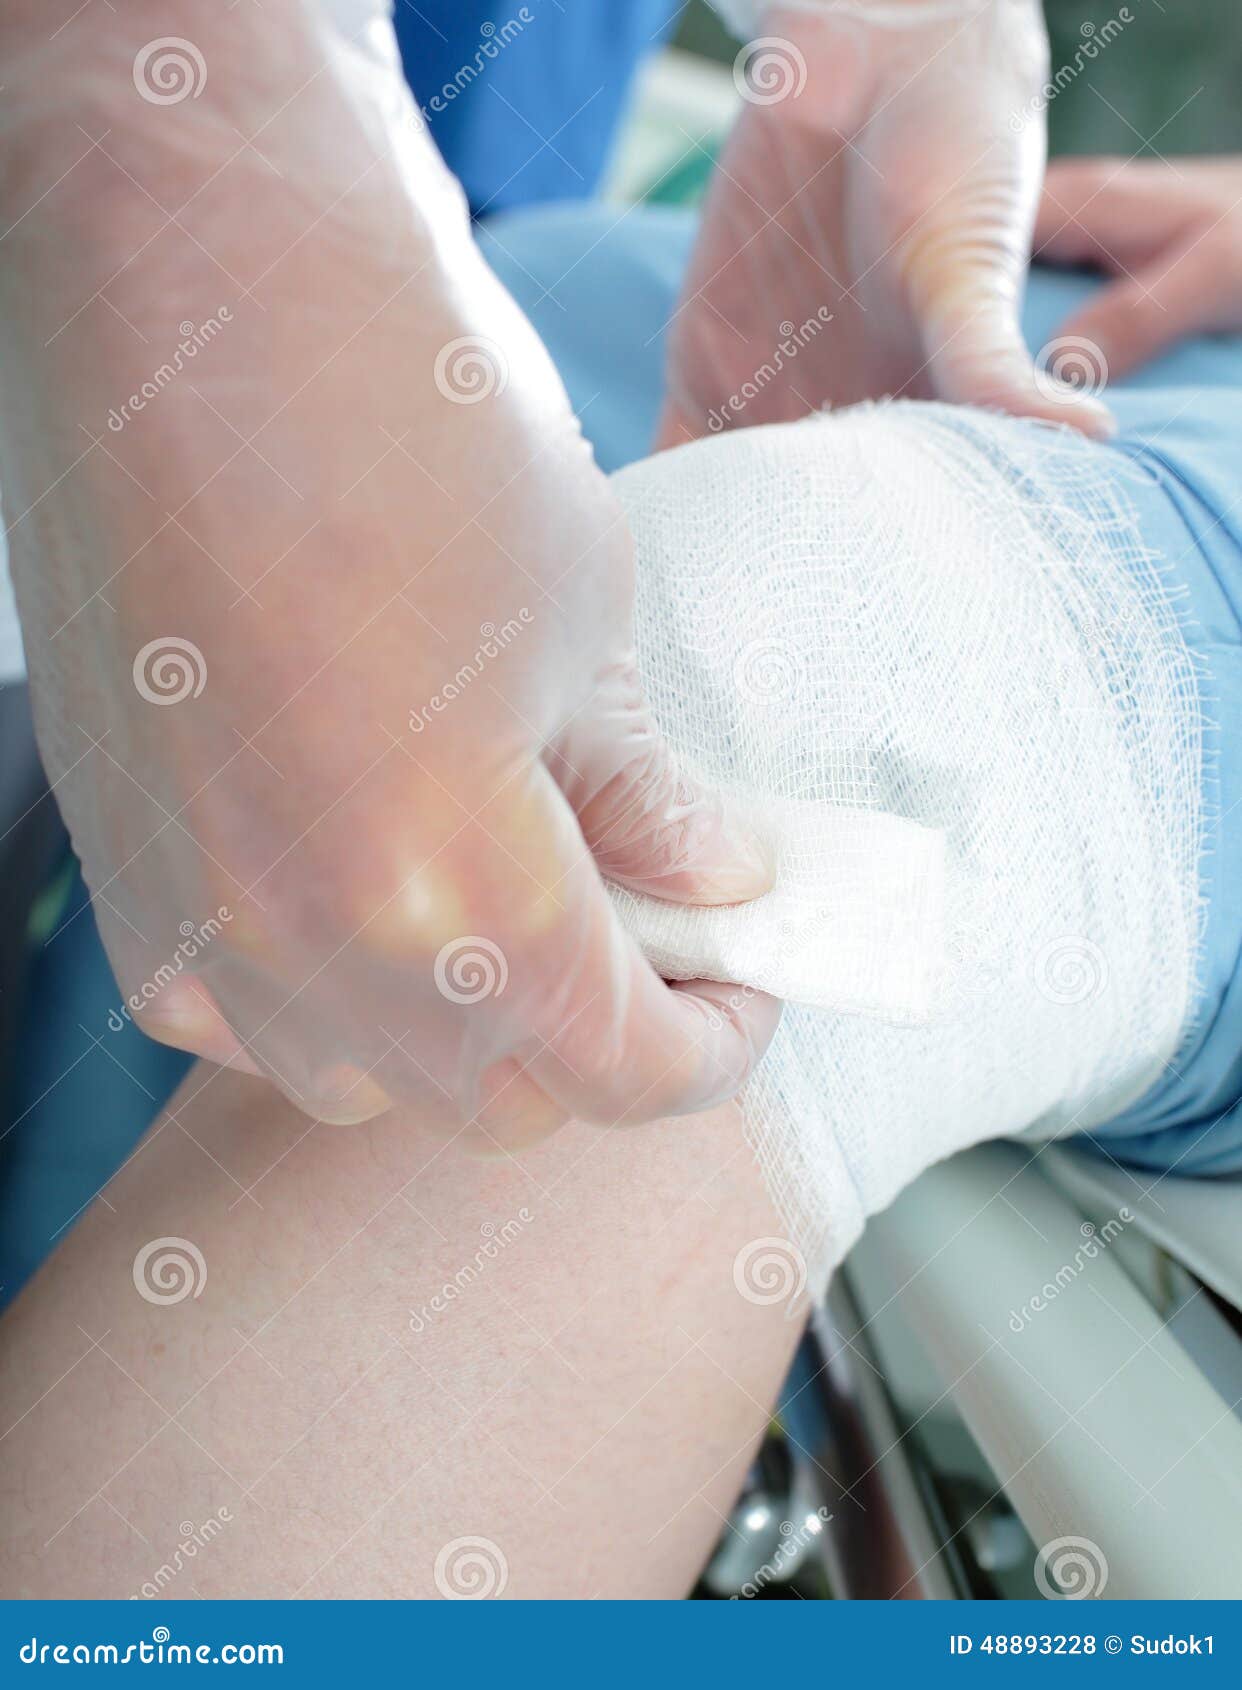 nurse provides first aid bandage